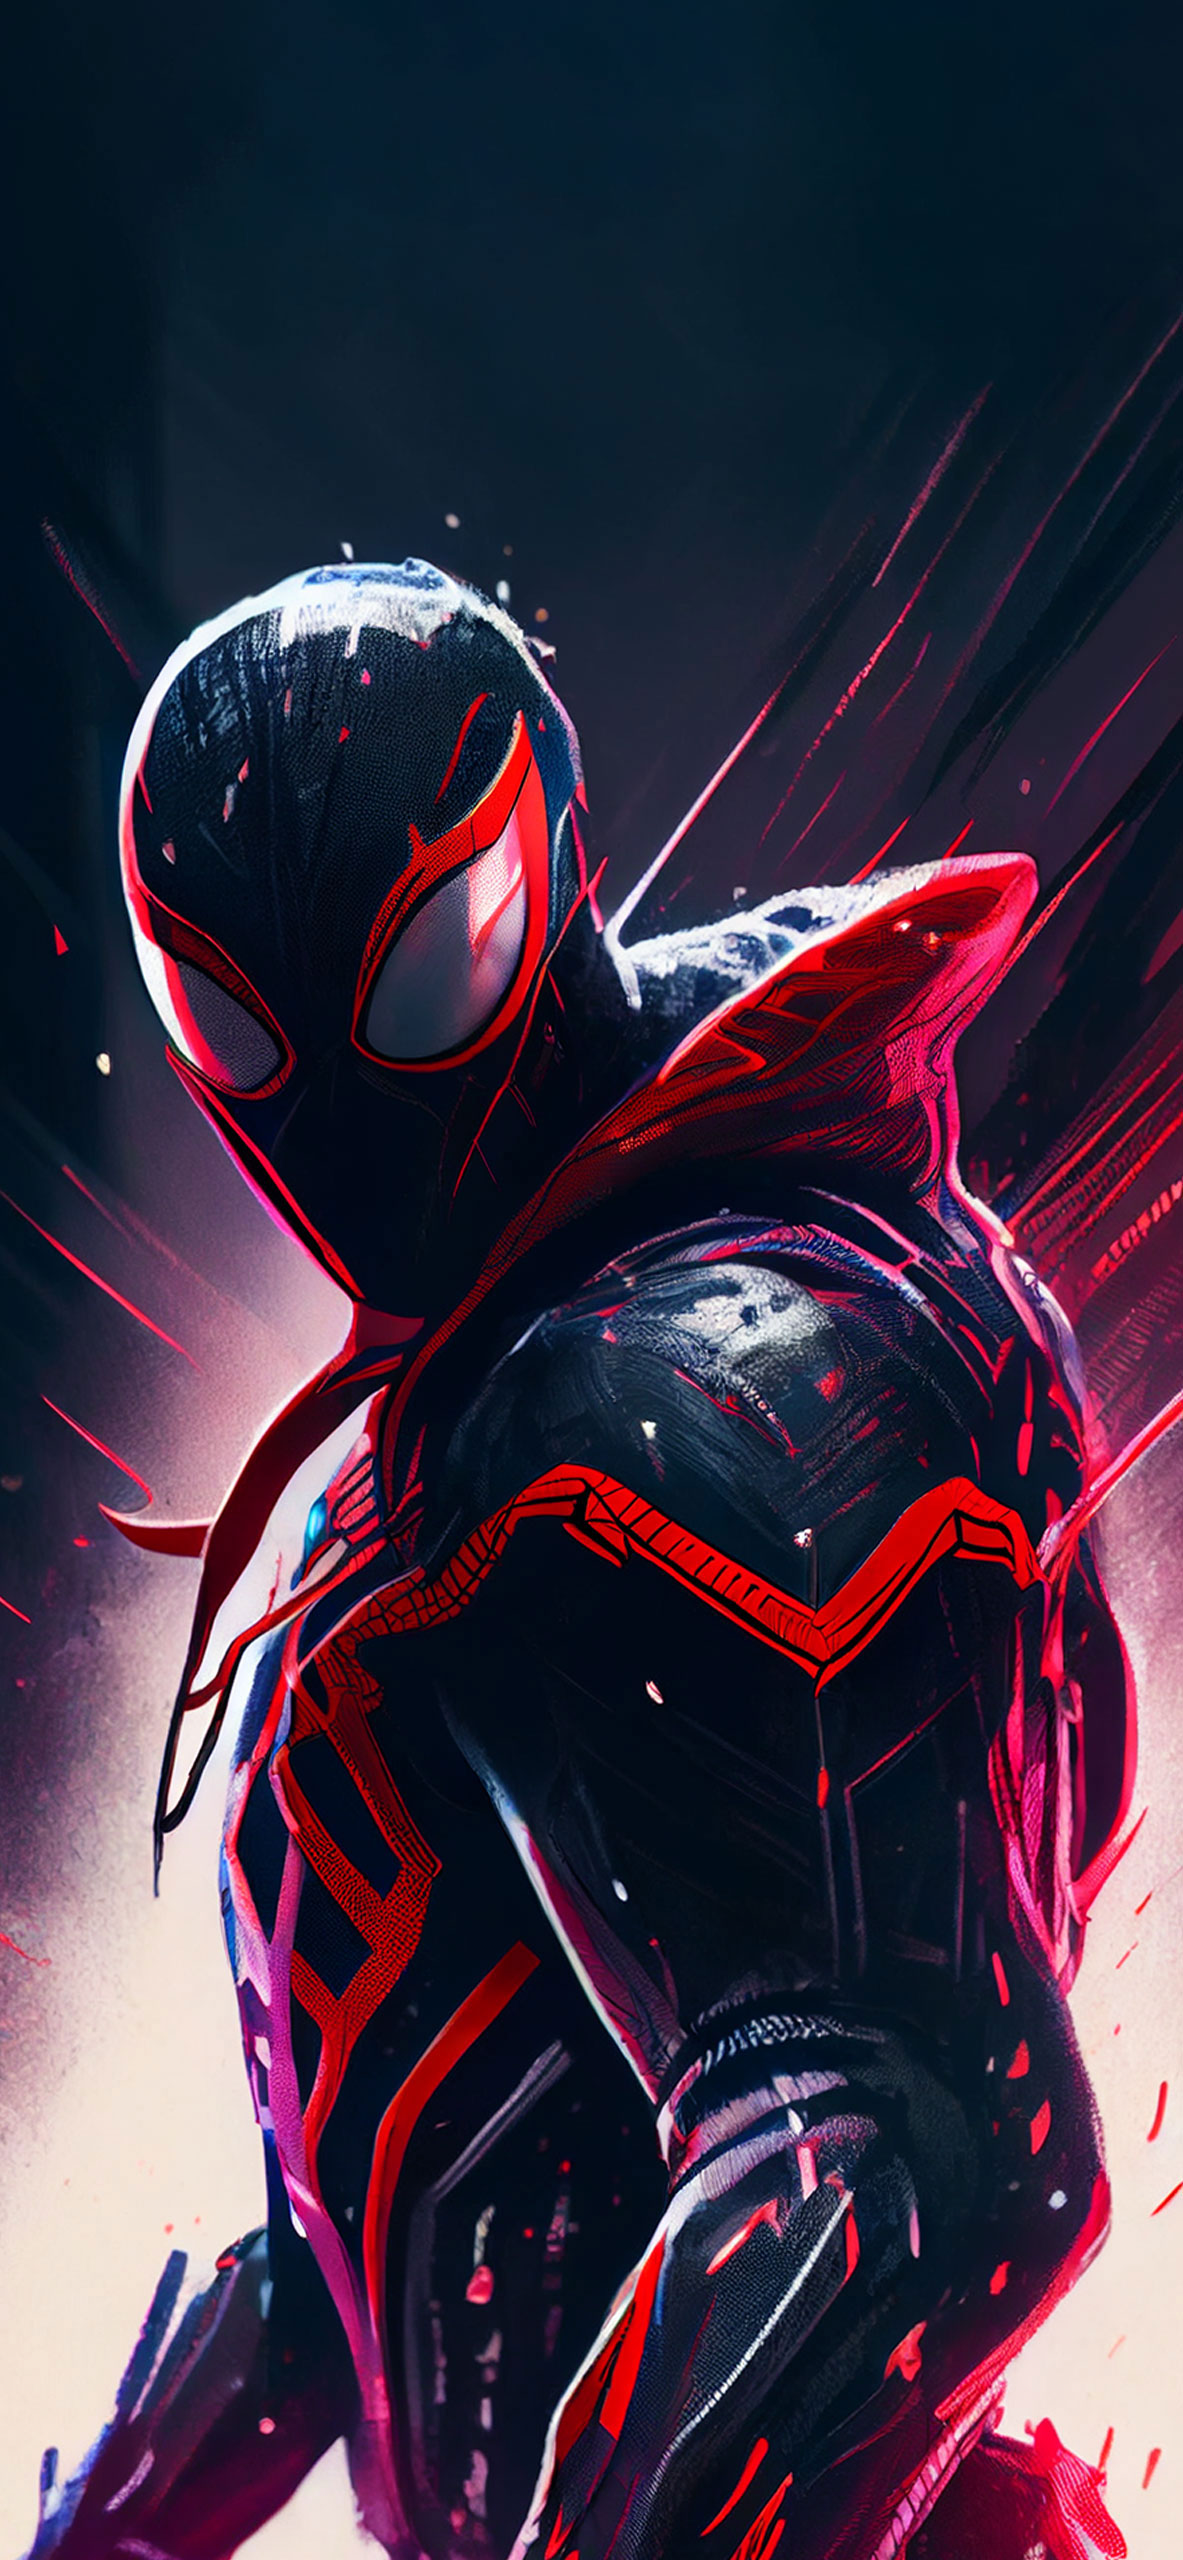 Spider-Man Miles Morales Wallpaper - Cool Spider-Man Wallpapers